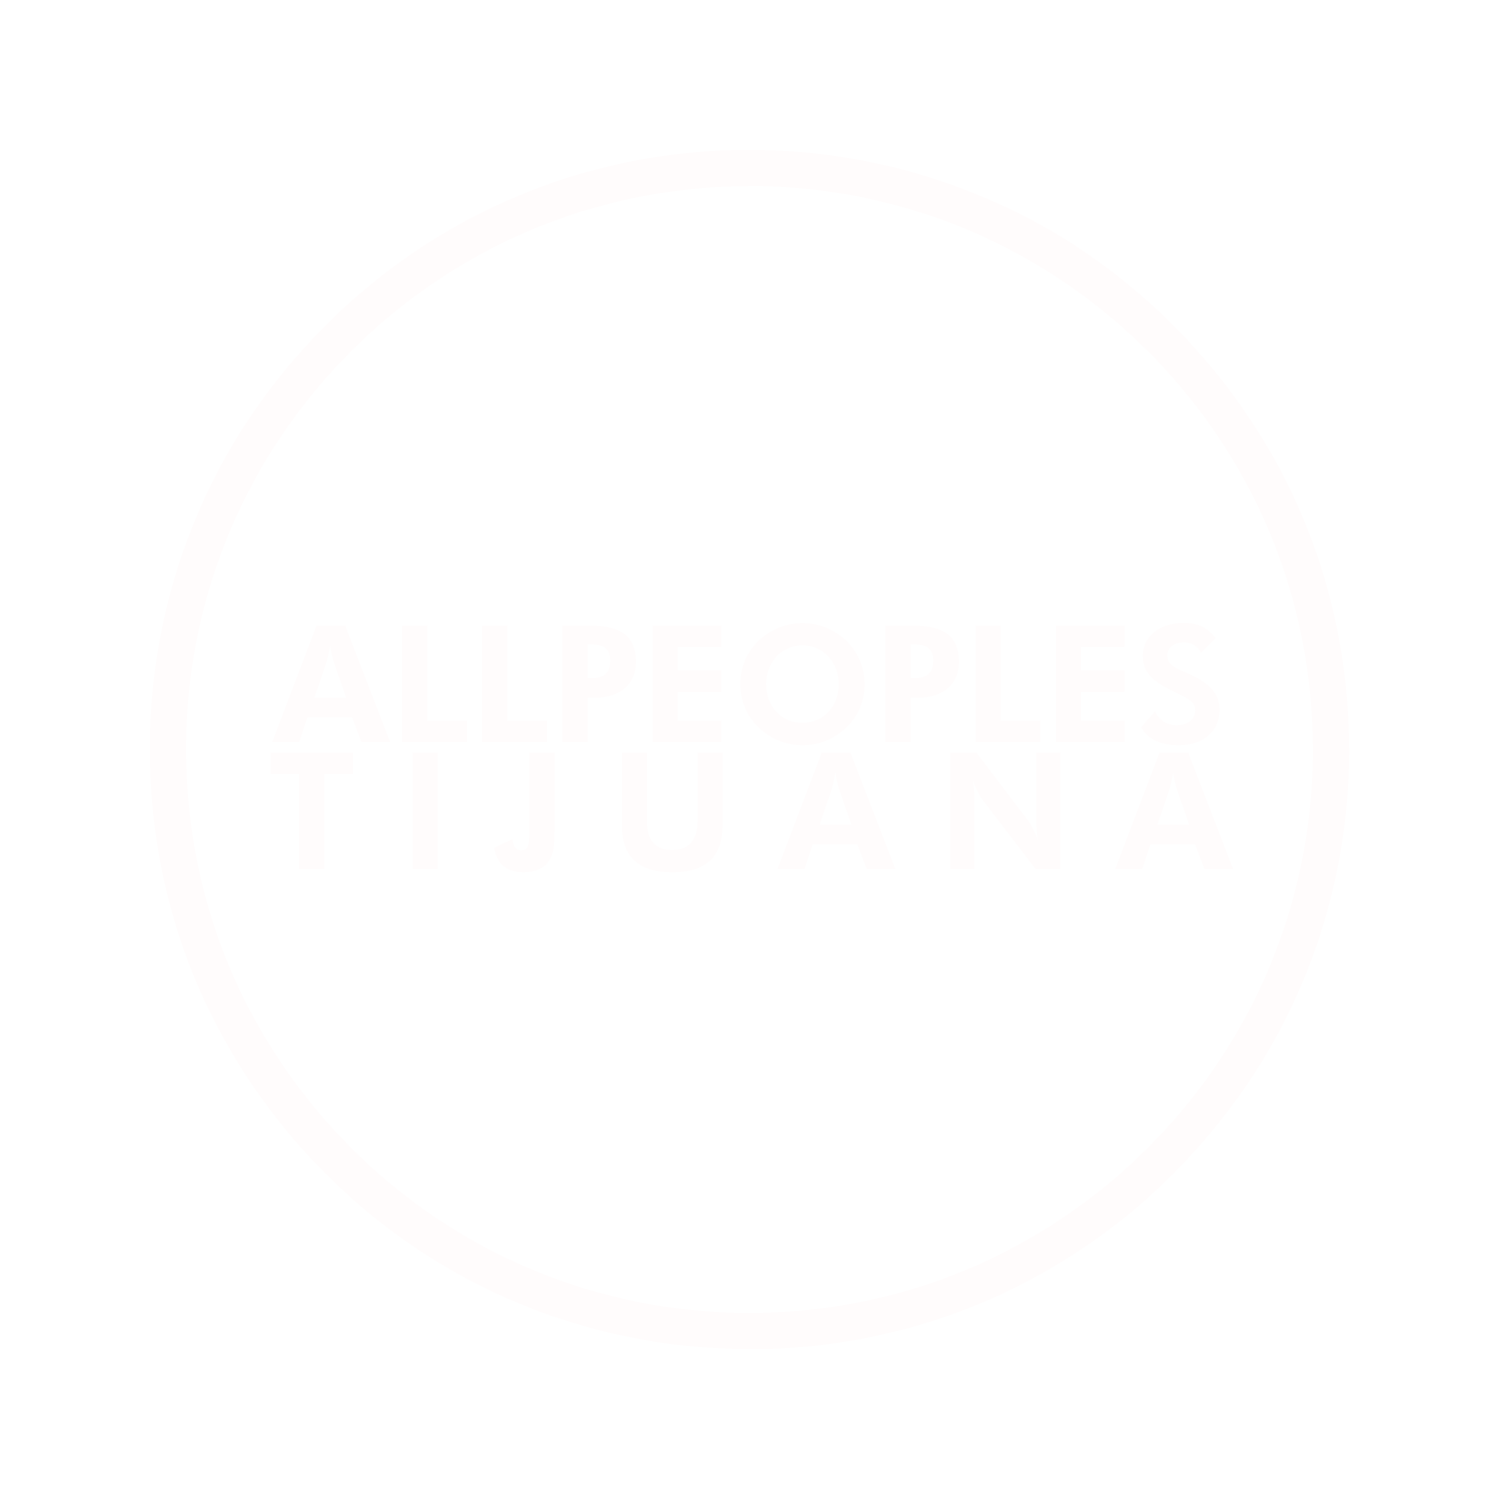 All Peoples Church Tijuana